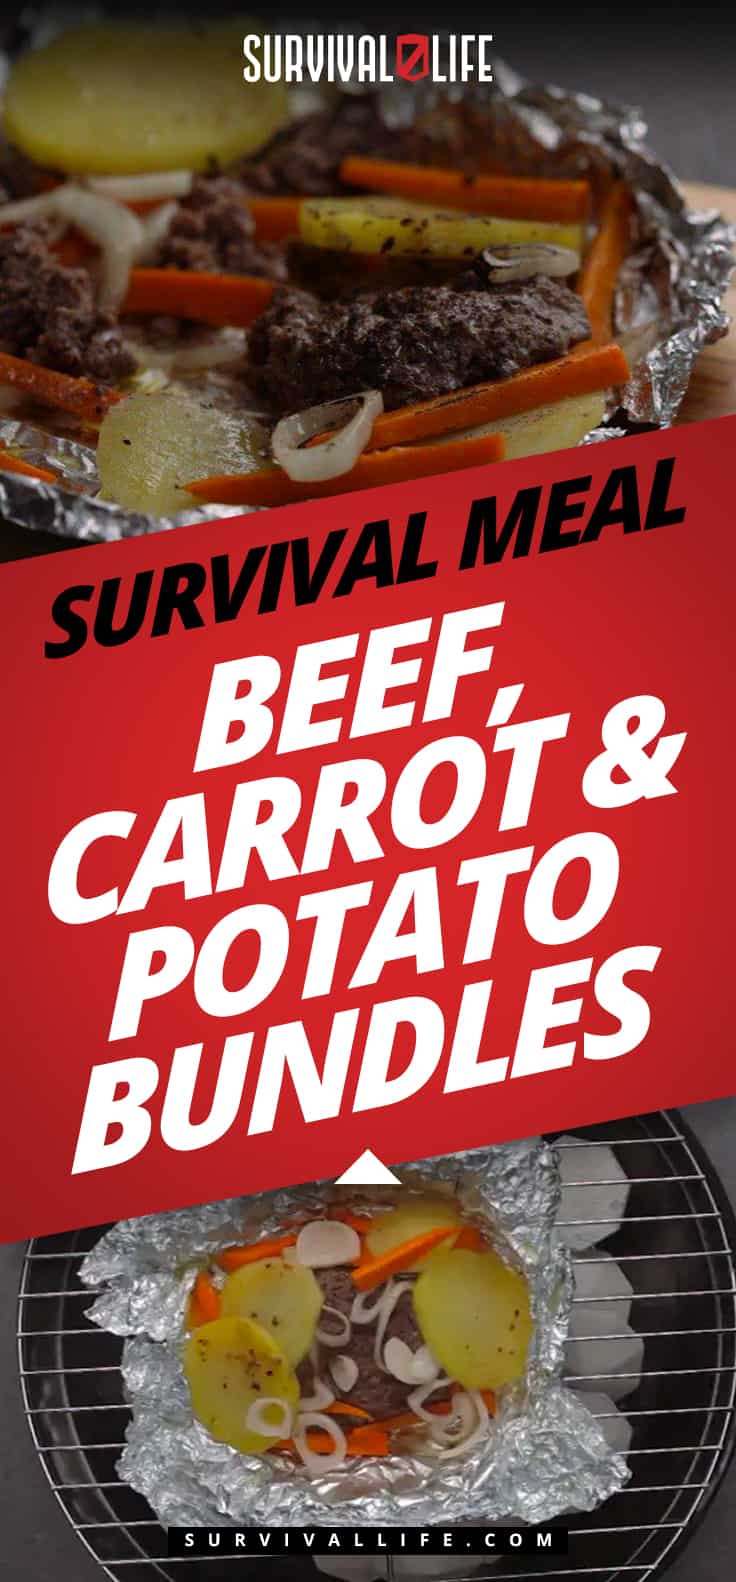 Survival Meal: Beef, Carrot & Potato Bundles